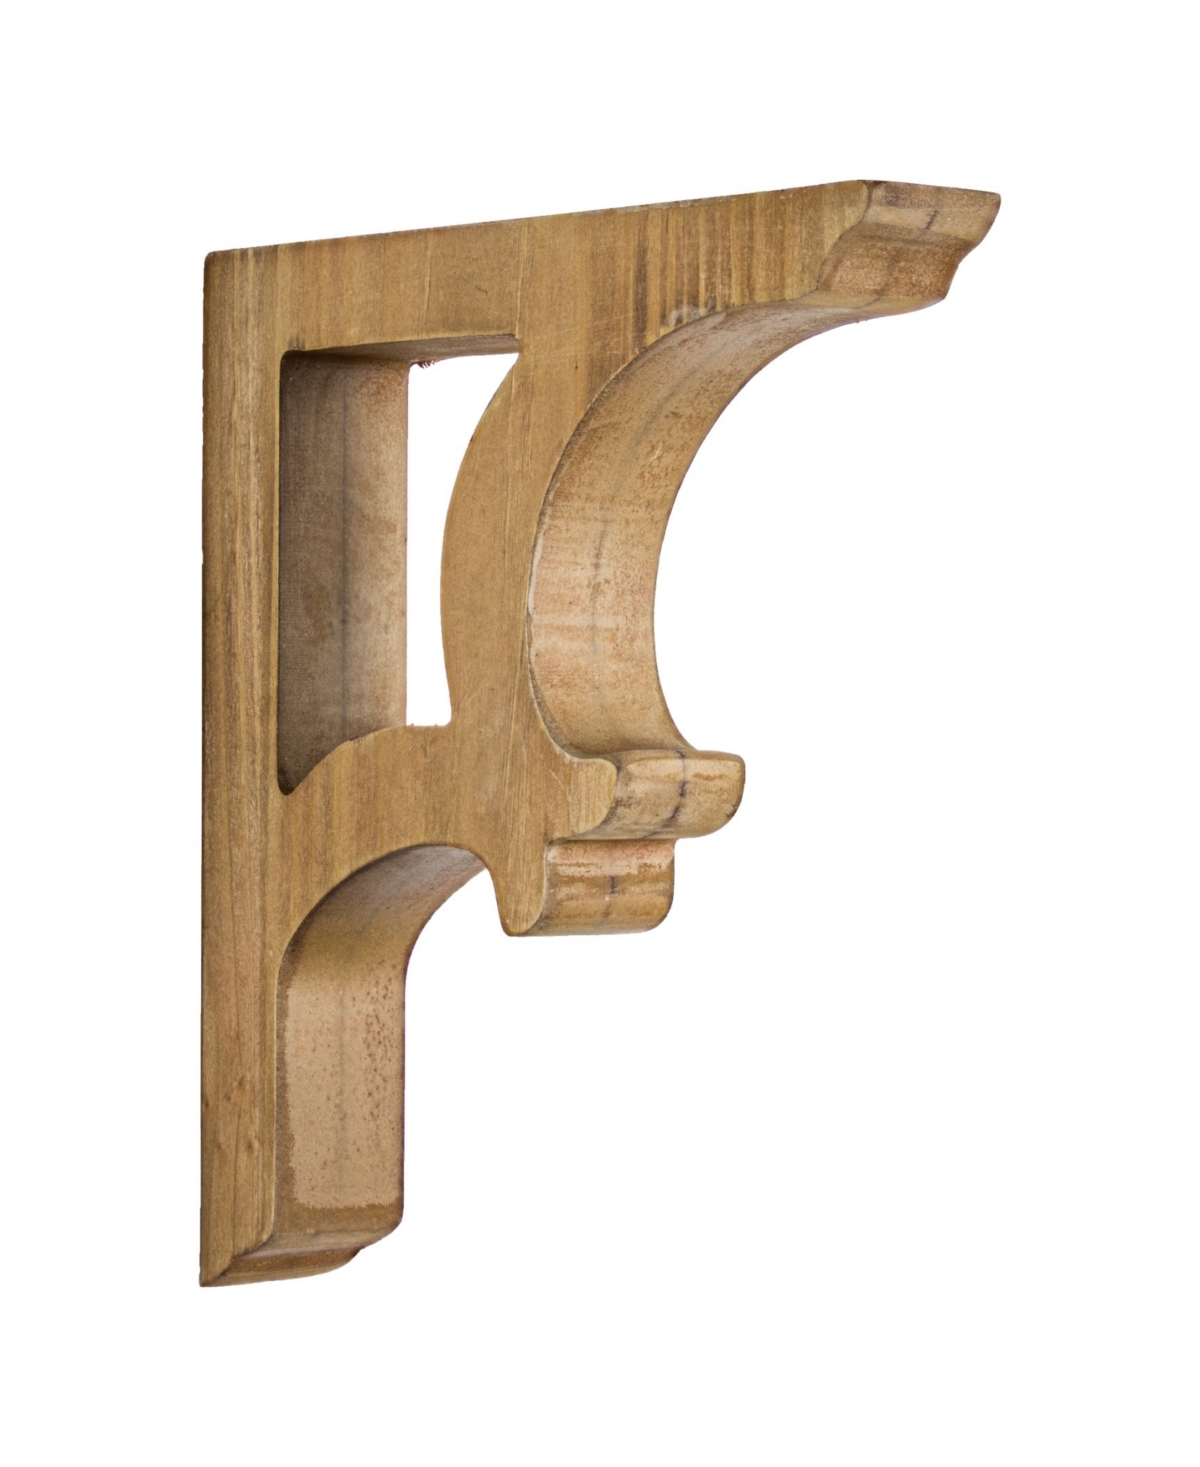 American Art Decor Wood Corbels Shelf Brackets, Set of 2 - Brown